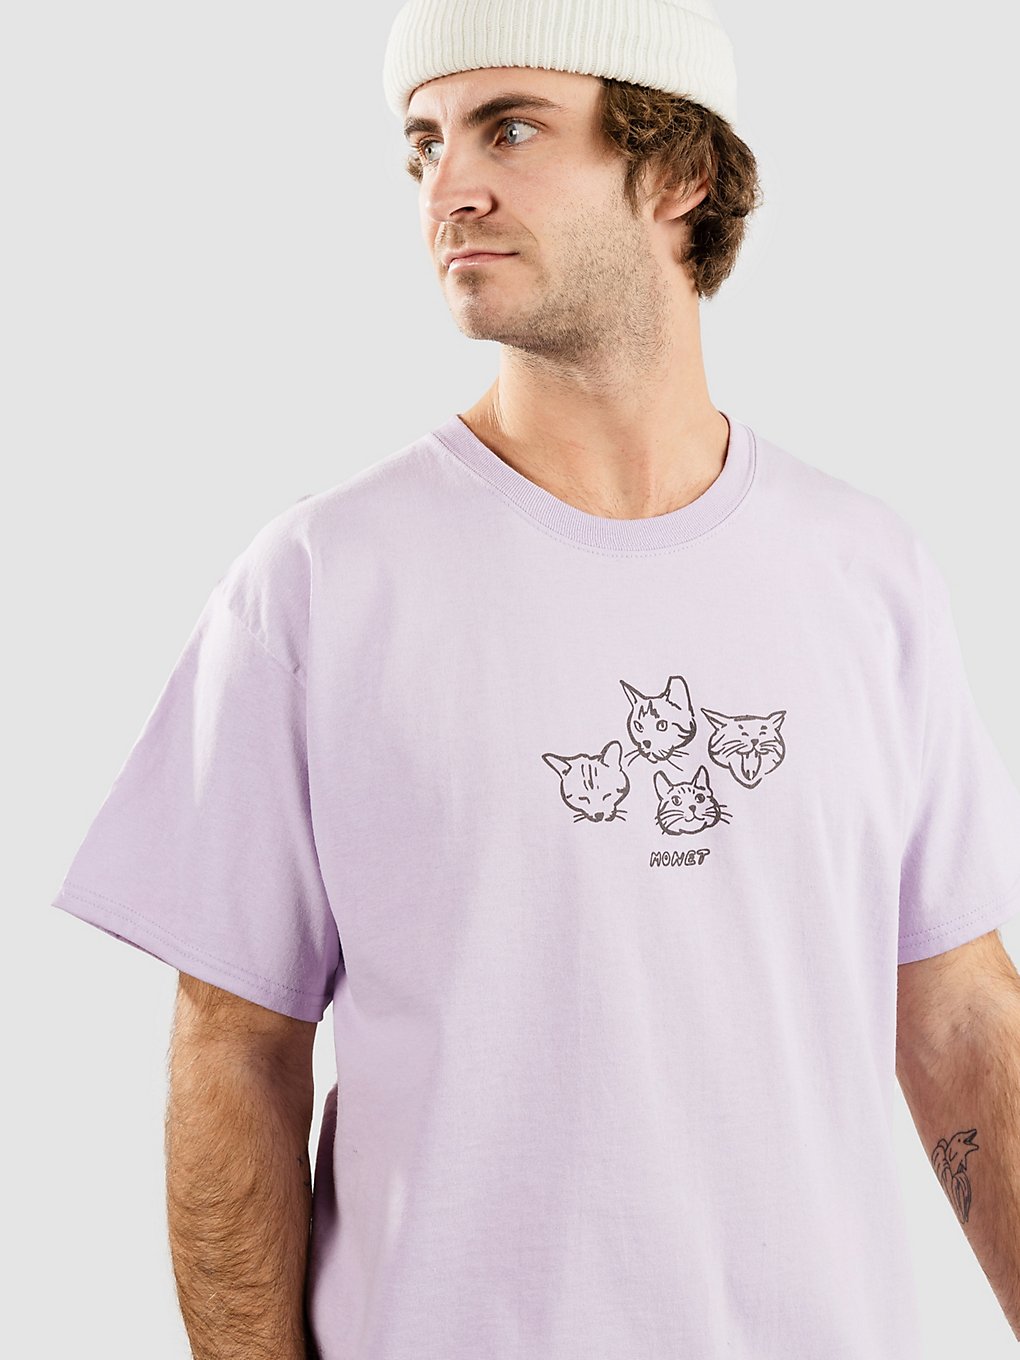 Monet Skateboards Meownet T-Shirt lavender kaufen